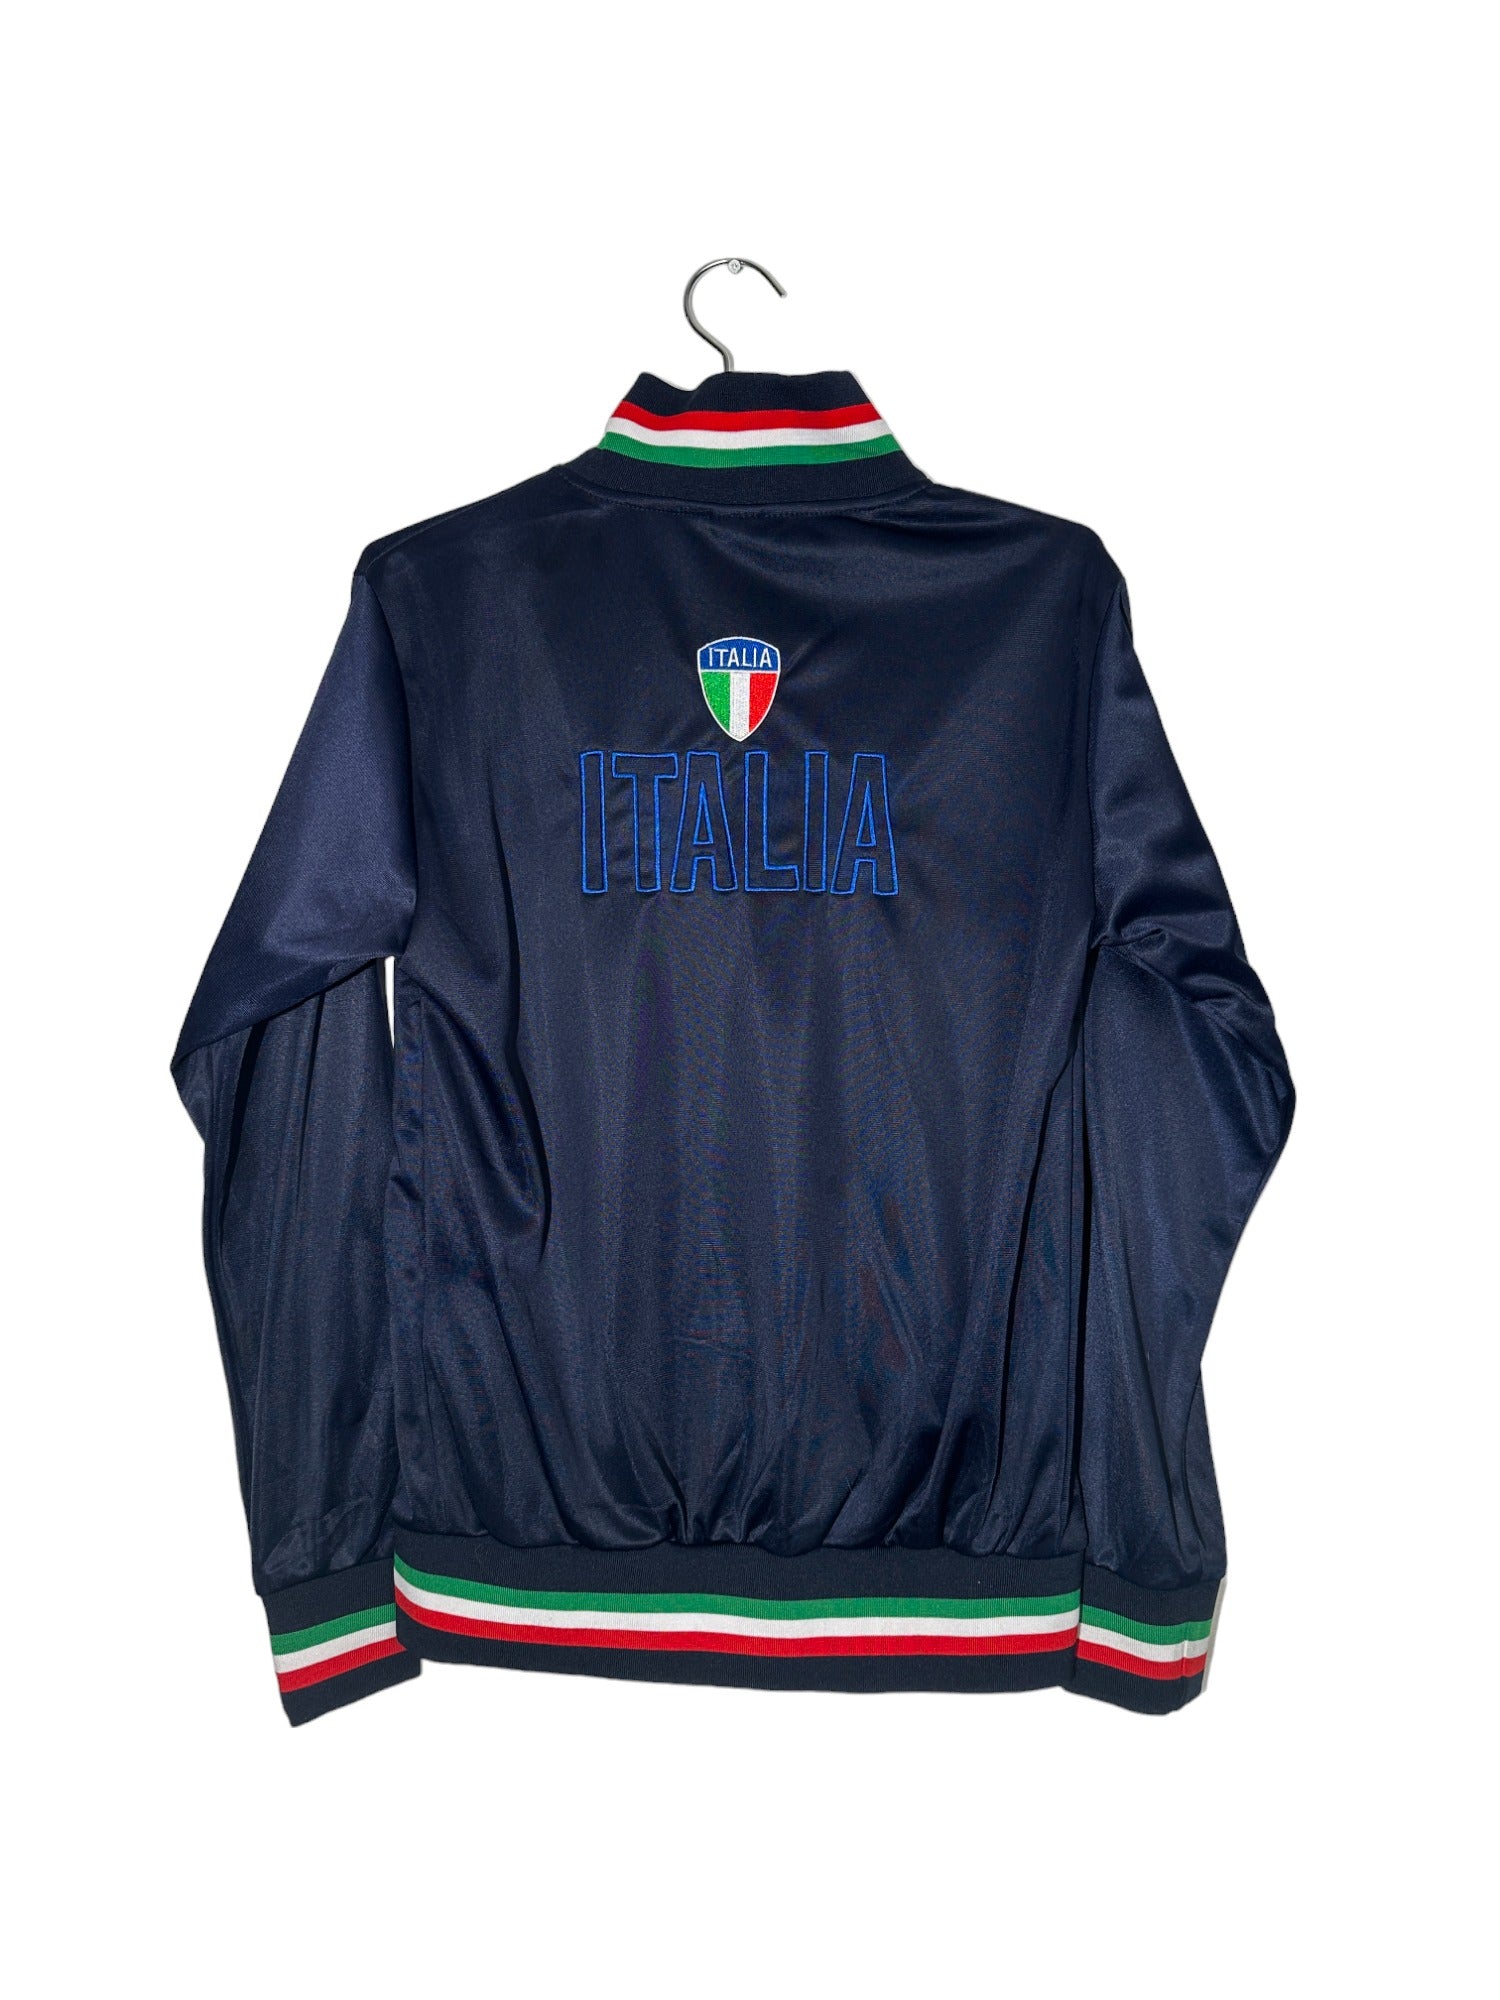 Blue "Italia" Zip Up Jacket